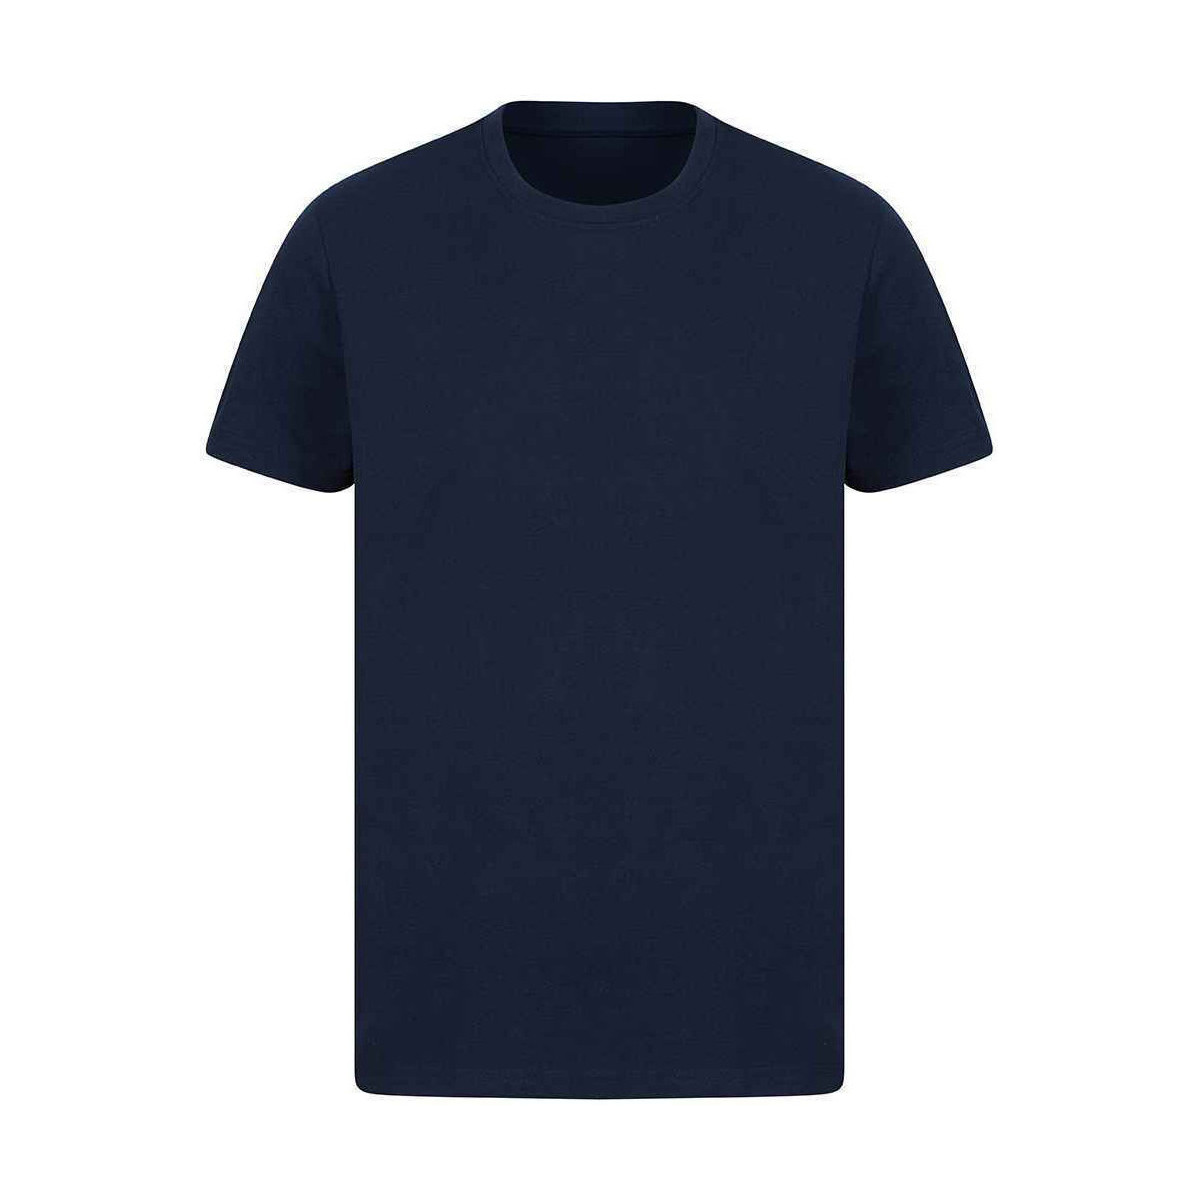 Vêtements T-shirts manches longues Sf Generation Bleu